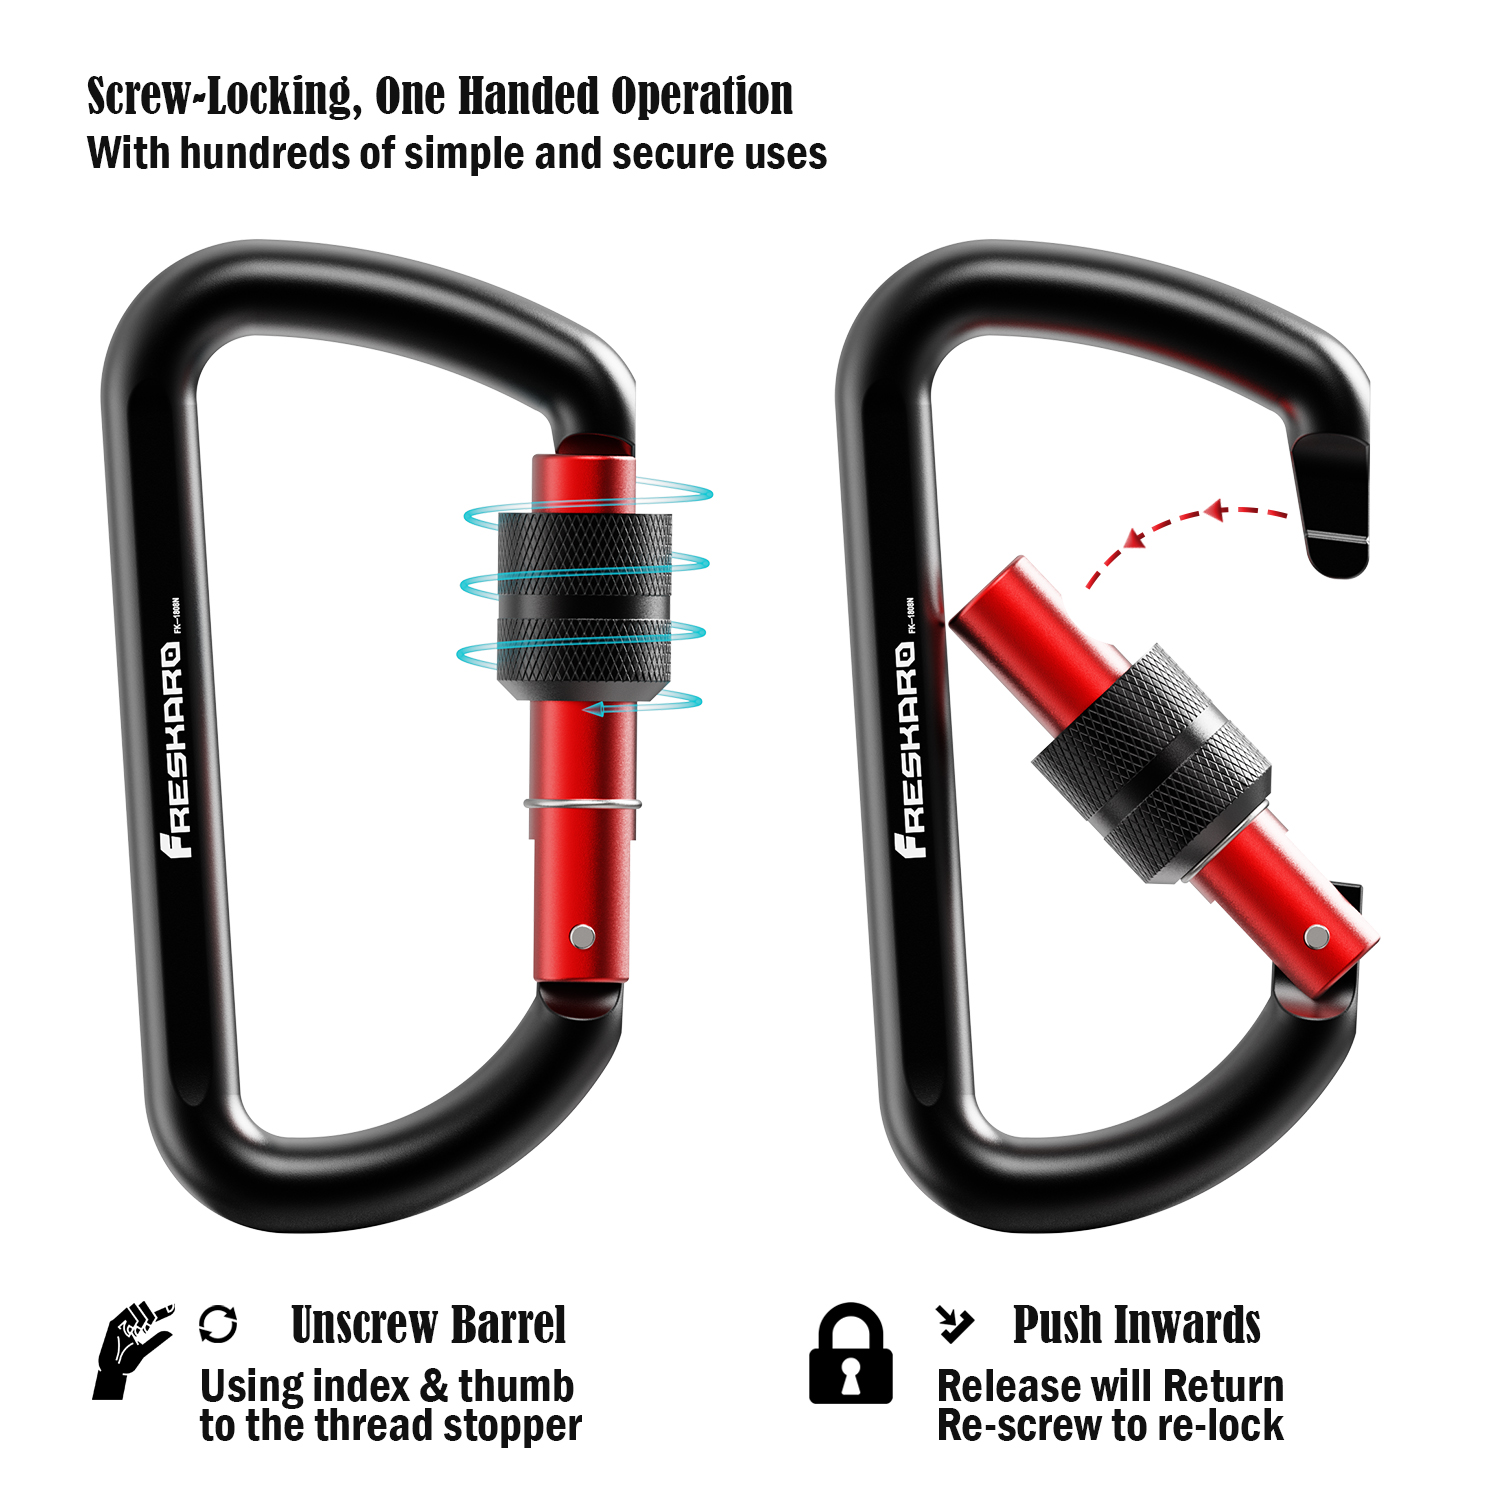 Extra-Small Locking Black Carabiner Clip